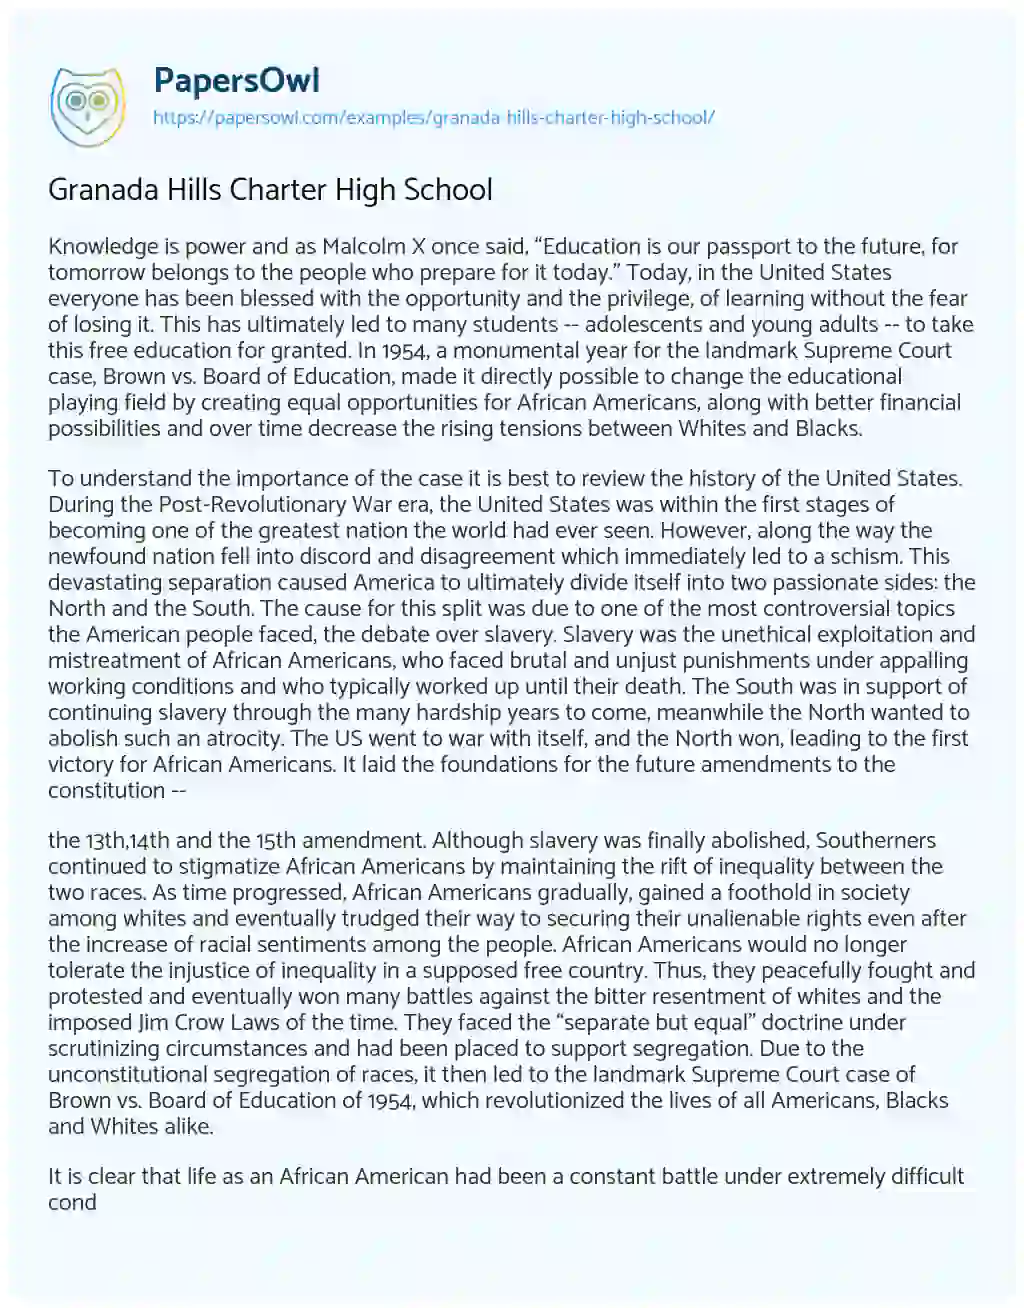 Essay on Granada Hills Charter High School